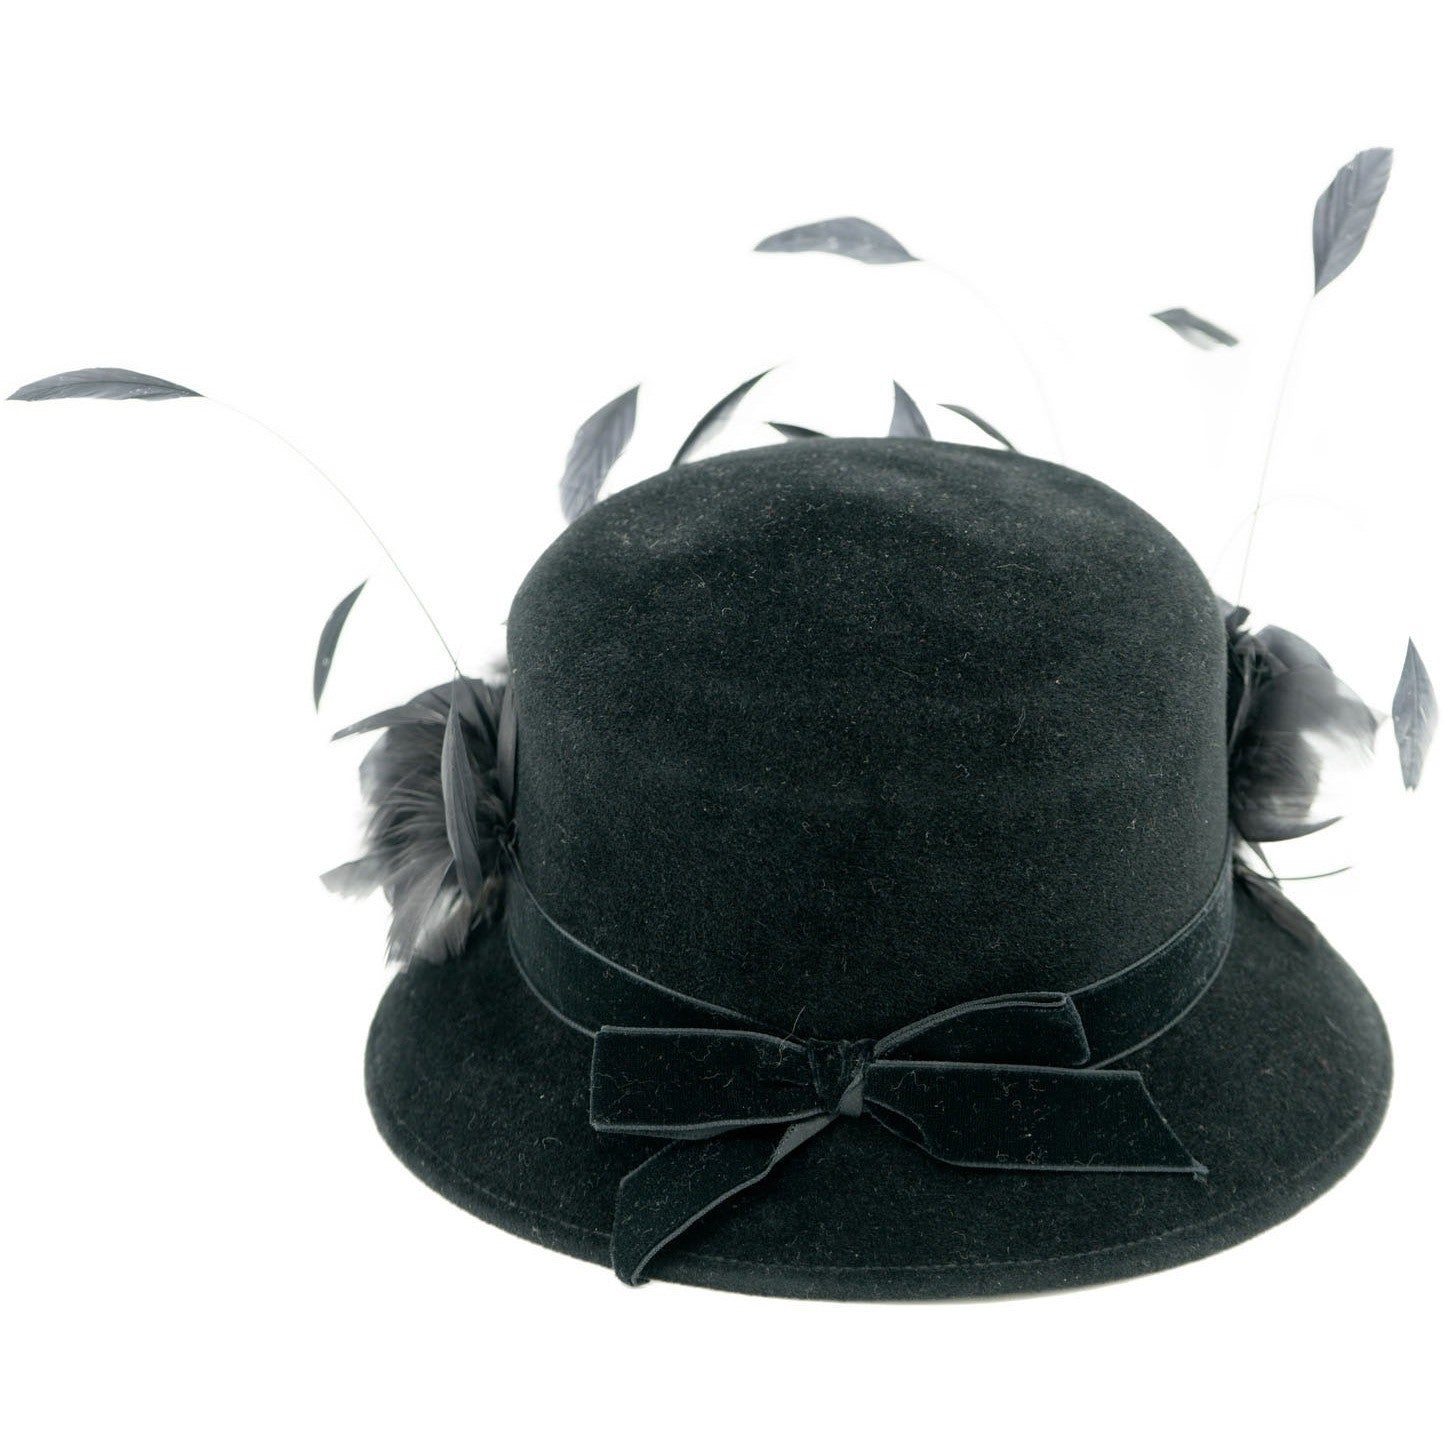 Luca Della Rocca Black Rabbit Hair Cloche Hat with Feathers